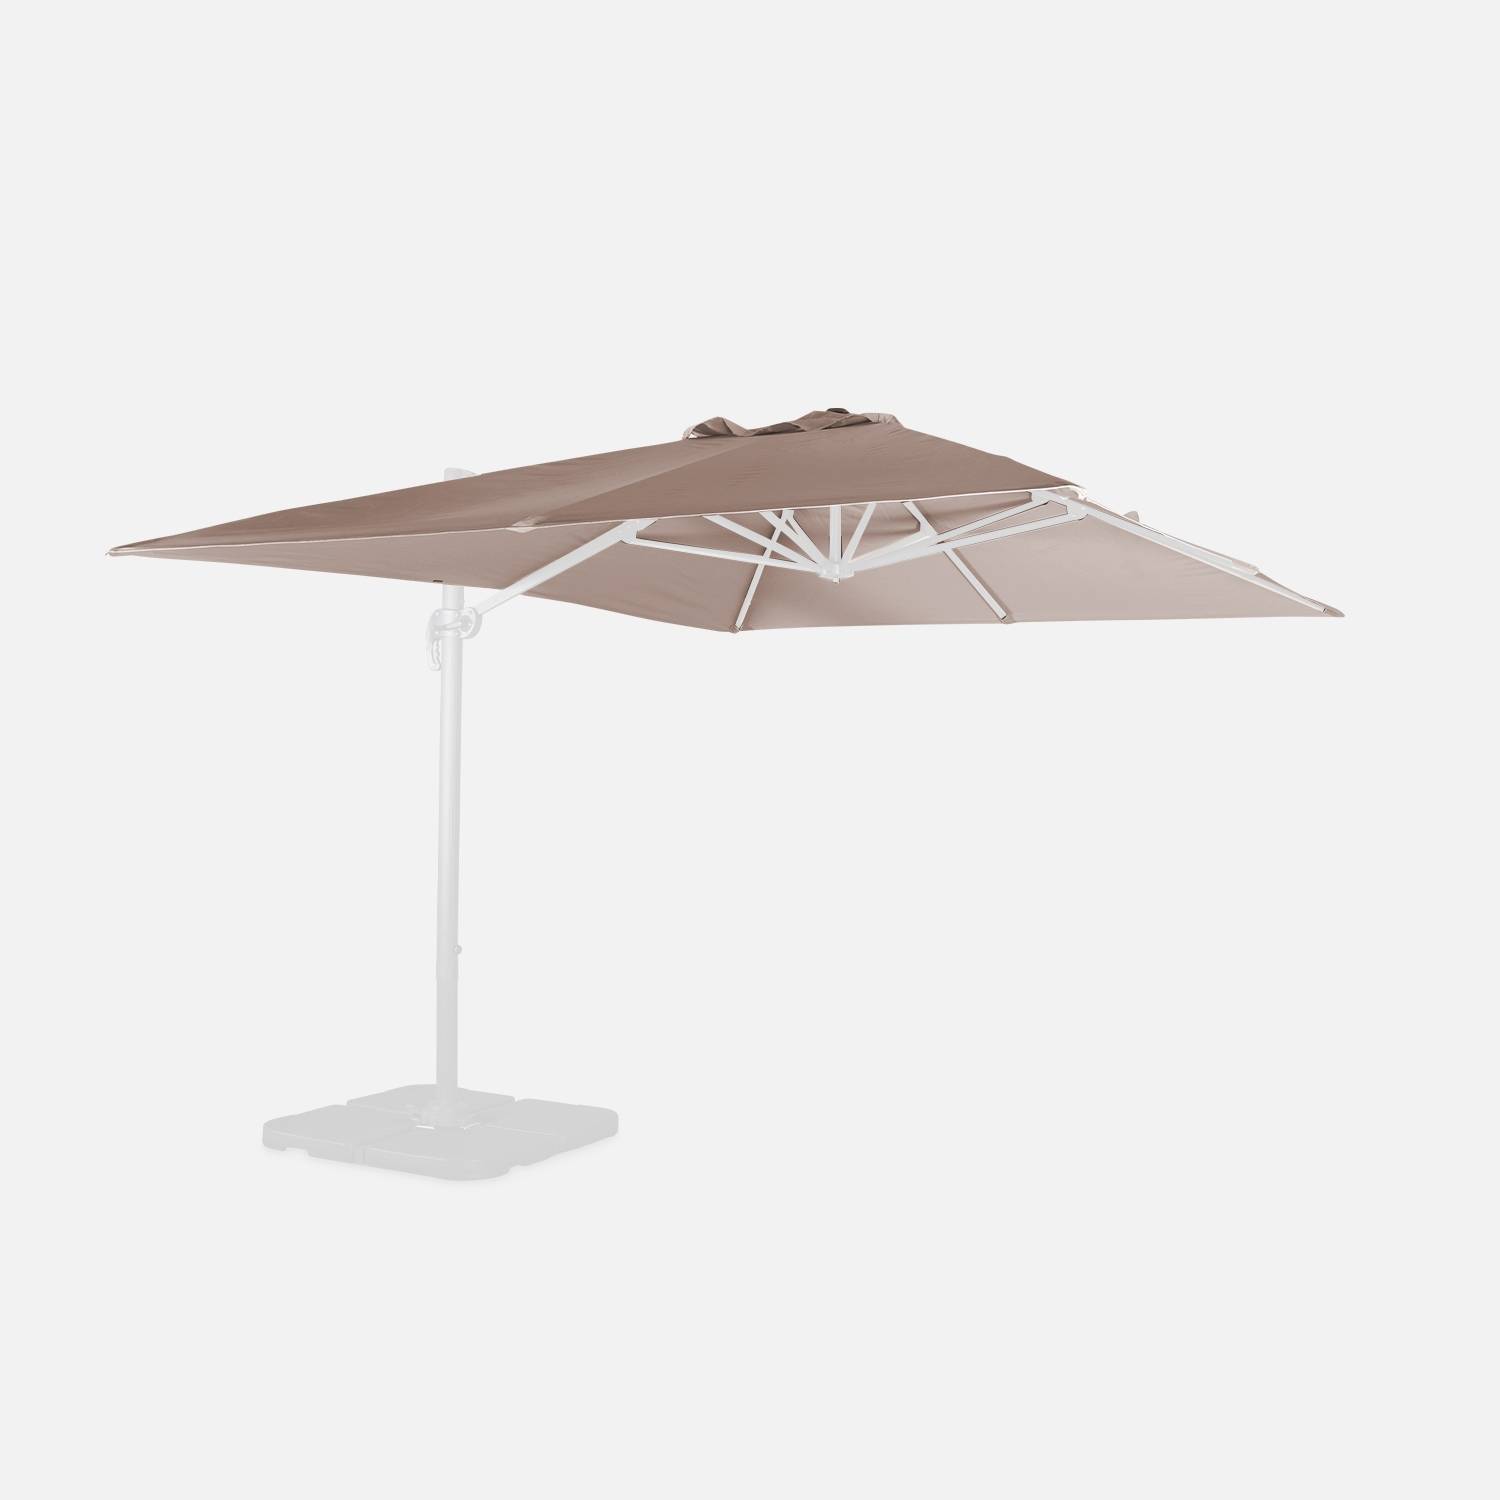 Taupe parasol cloth for 3x4m parasol Wimereux | sweeek